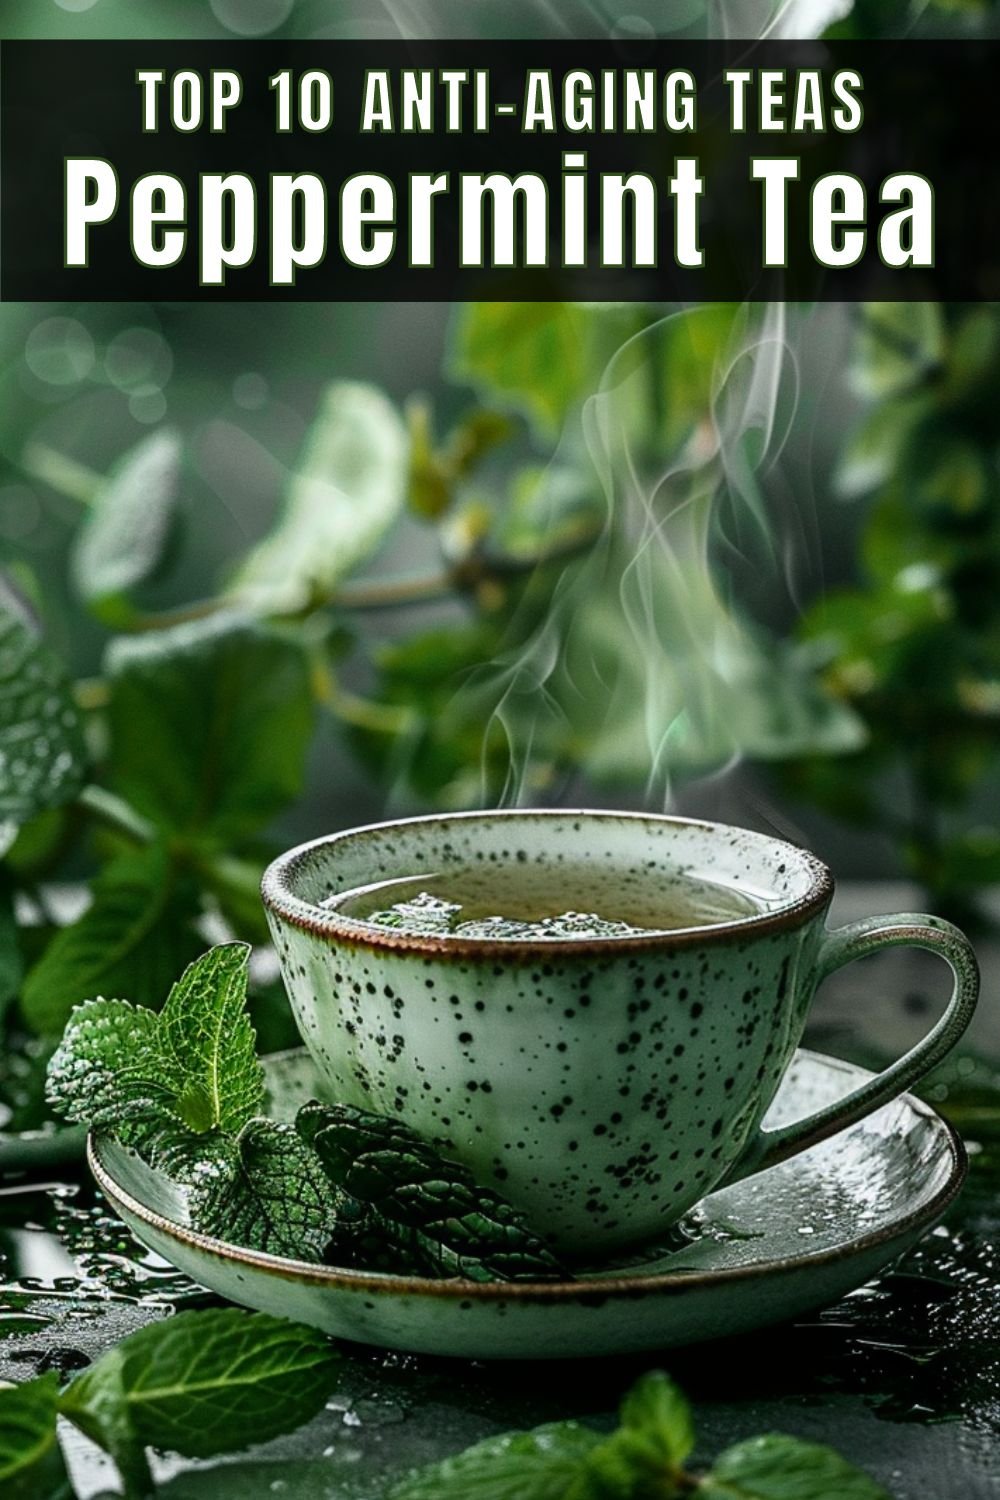 Top 10 Anti-Aging Teas Peppermint Tea